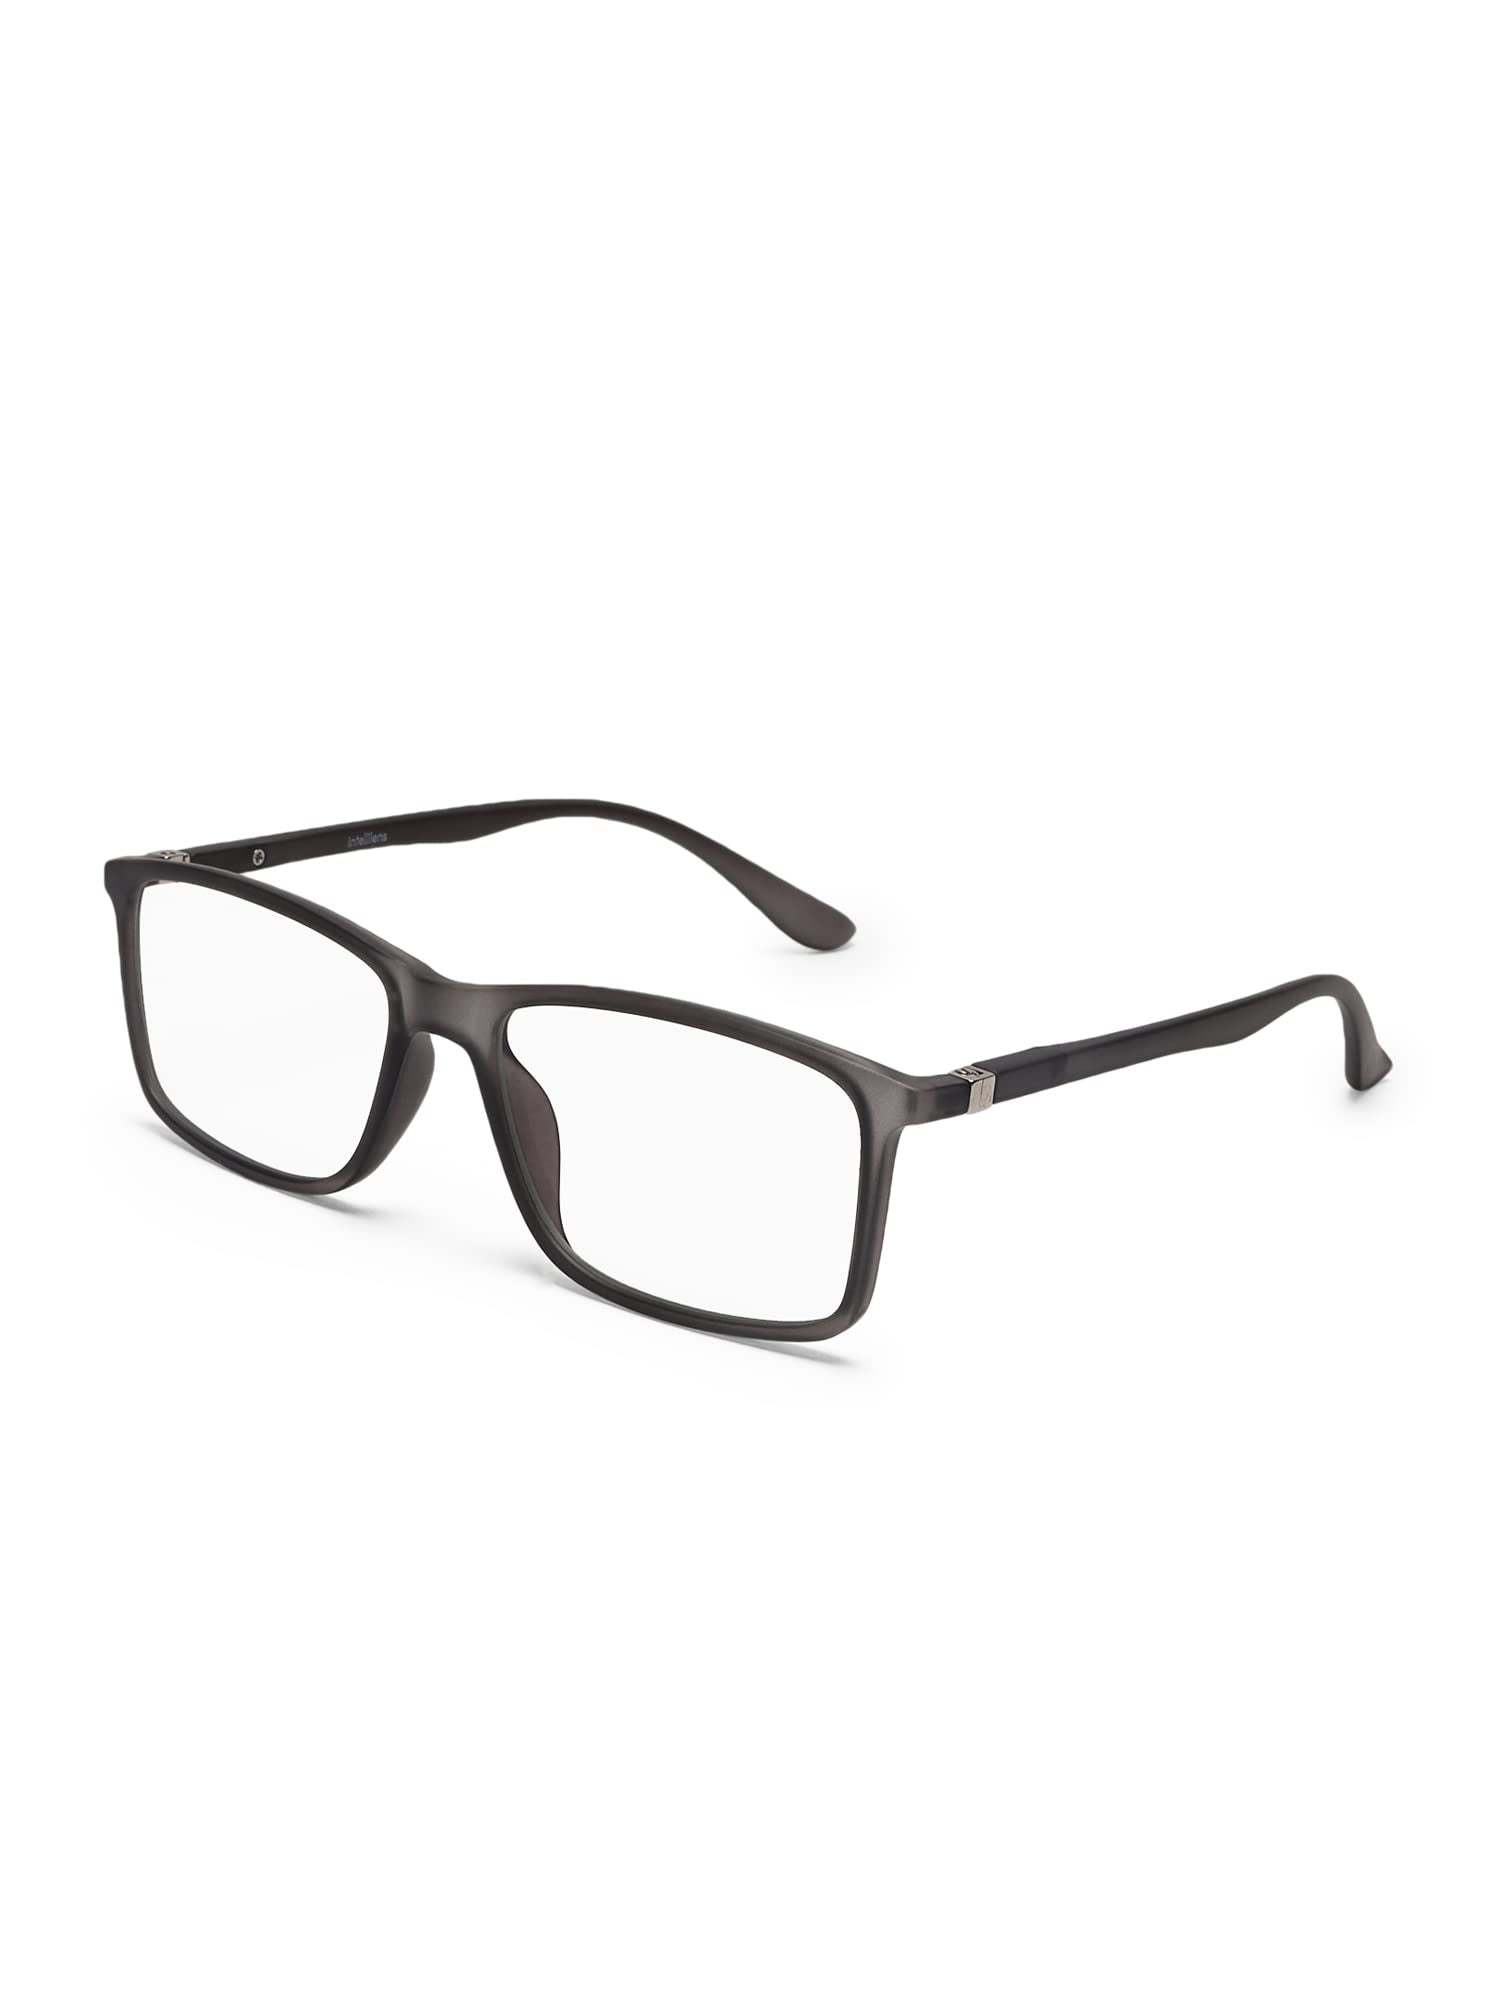 Intellilens Square Blue Cut Computer Glasses for Eye Protection (Grey) | Unisex, UV ProtectionZero Power, Anti Glare & Blue Light Filter Glasses